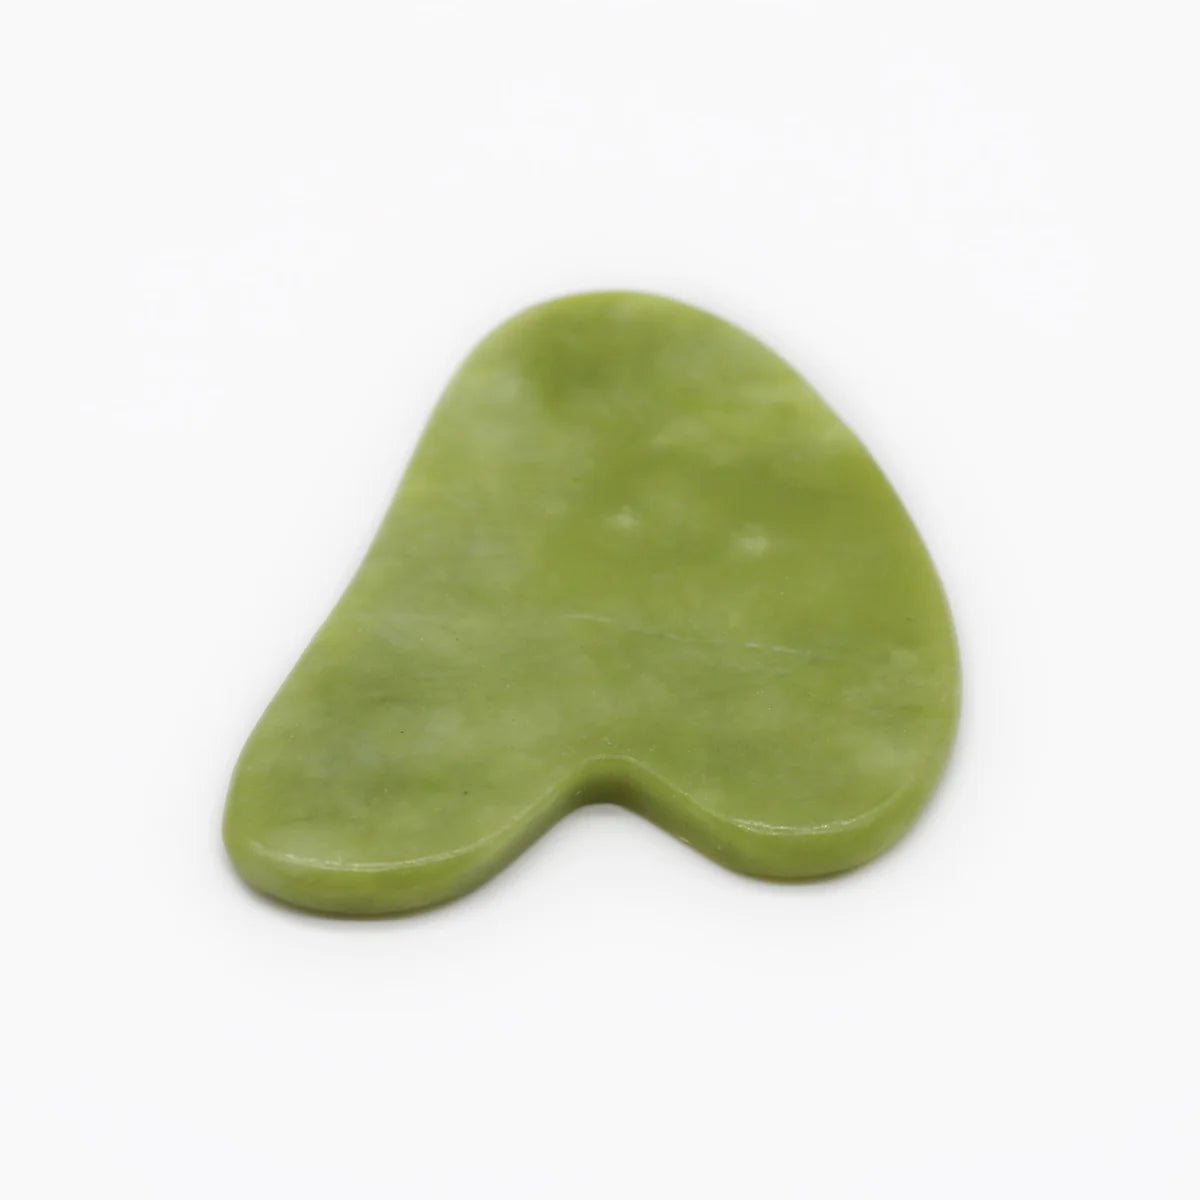 Gua Sha Facial Tool, Jade Green Lymphatic Drainage Facial Massage Tool